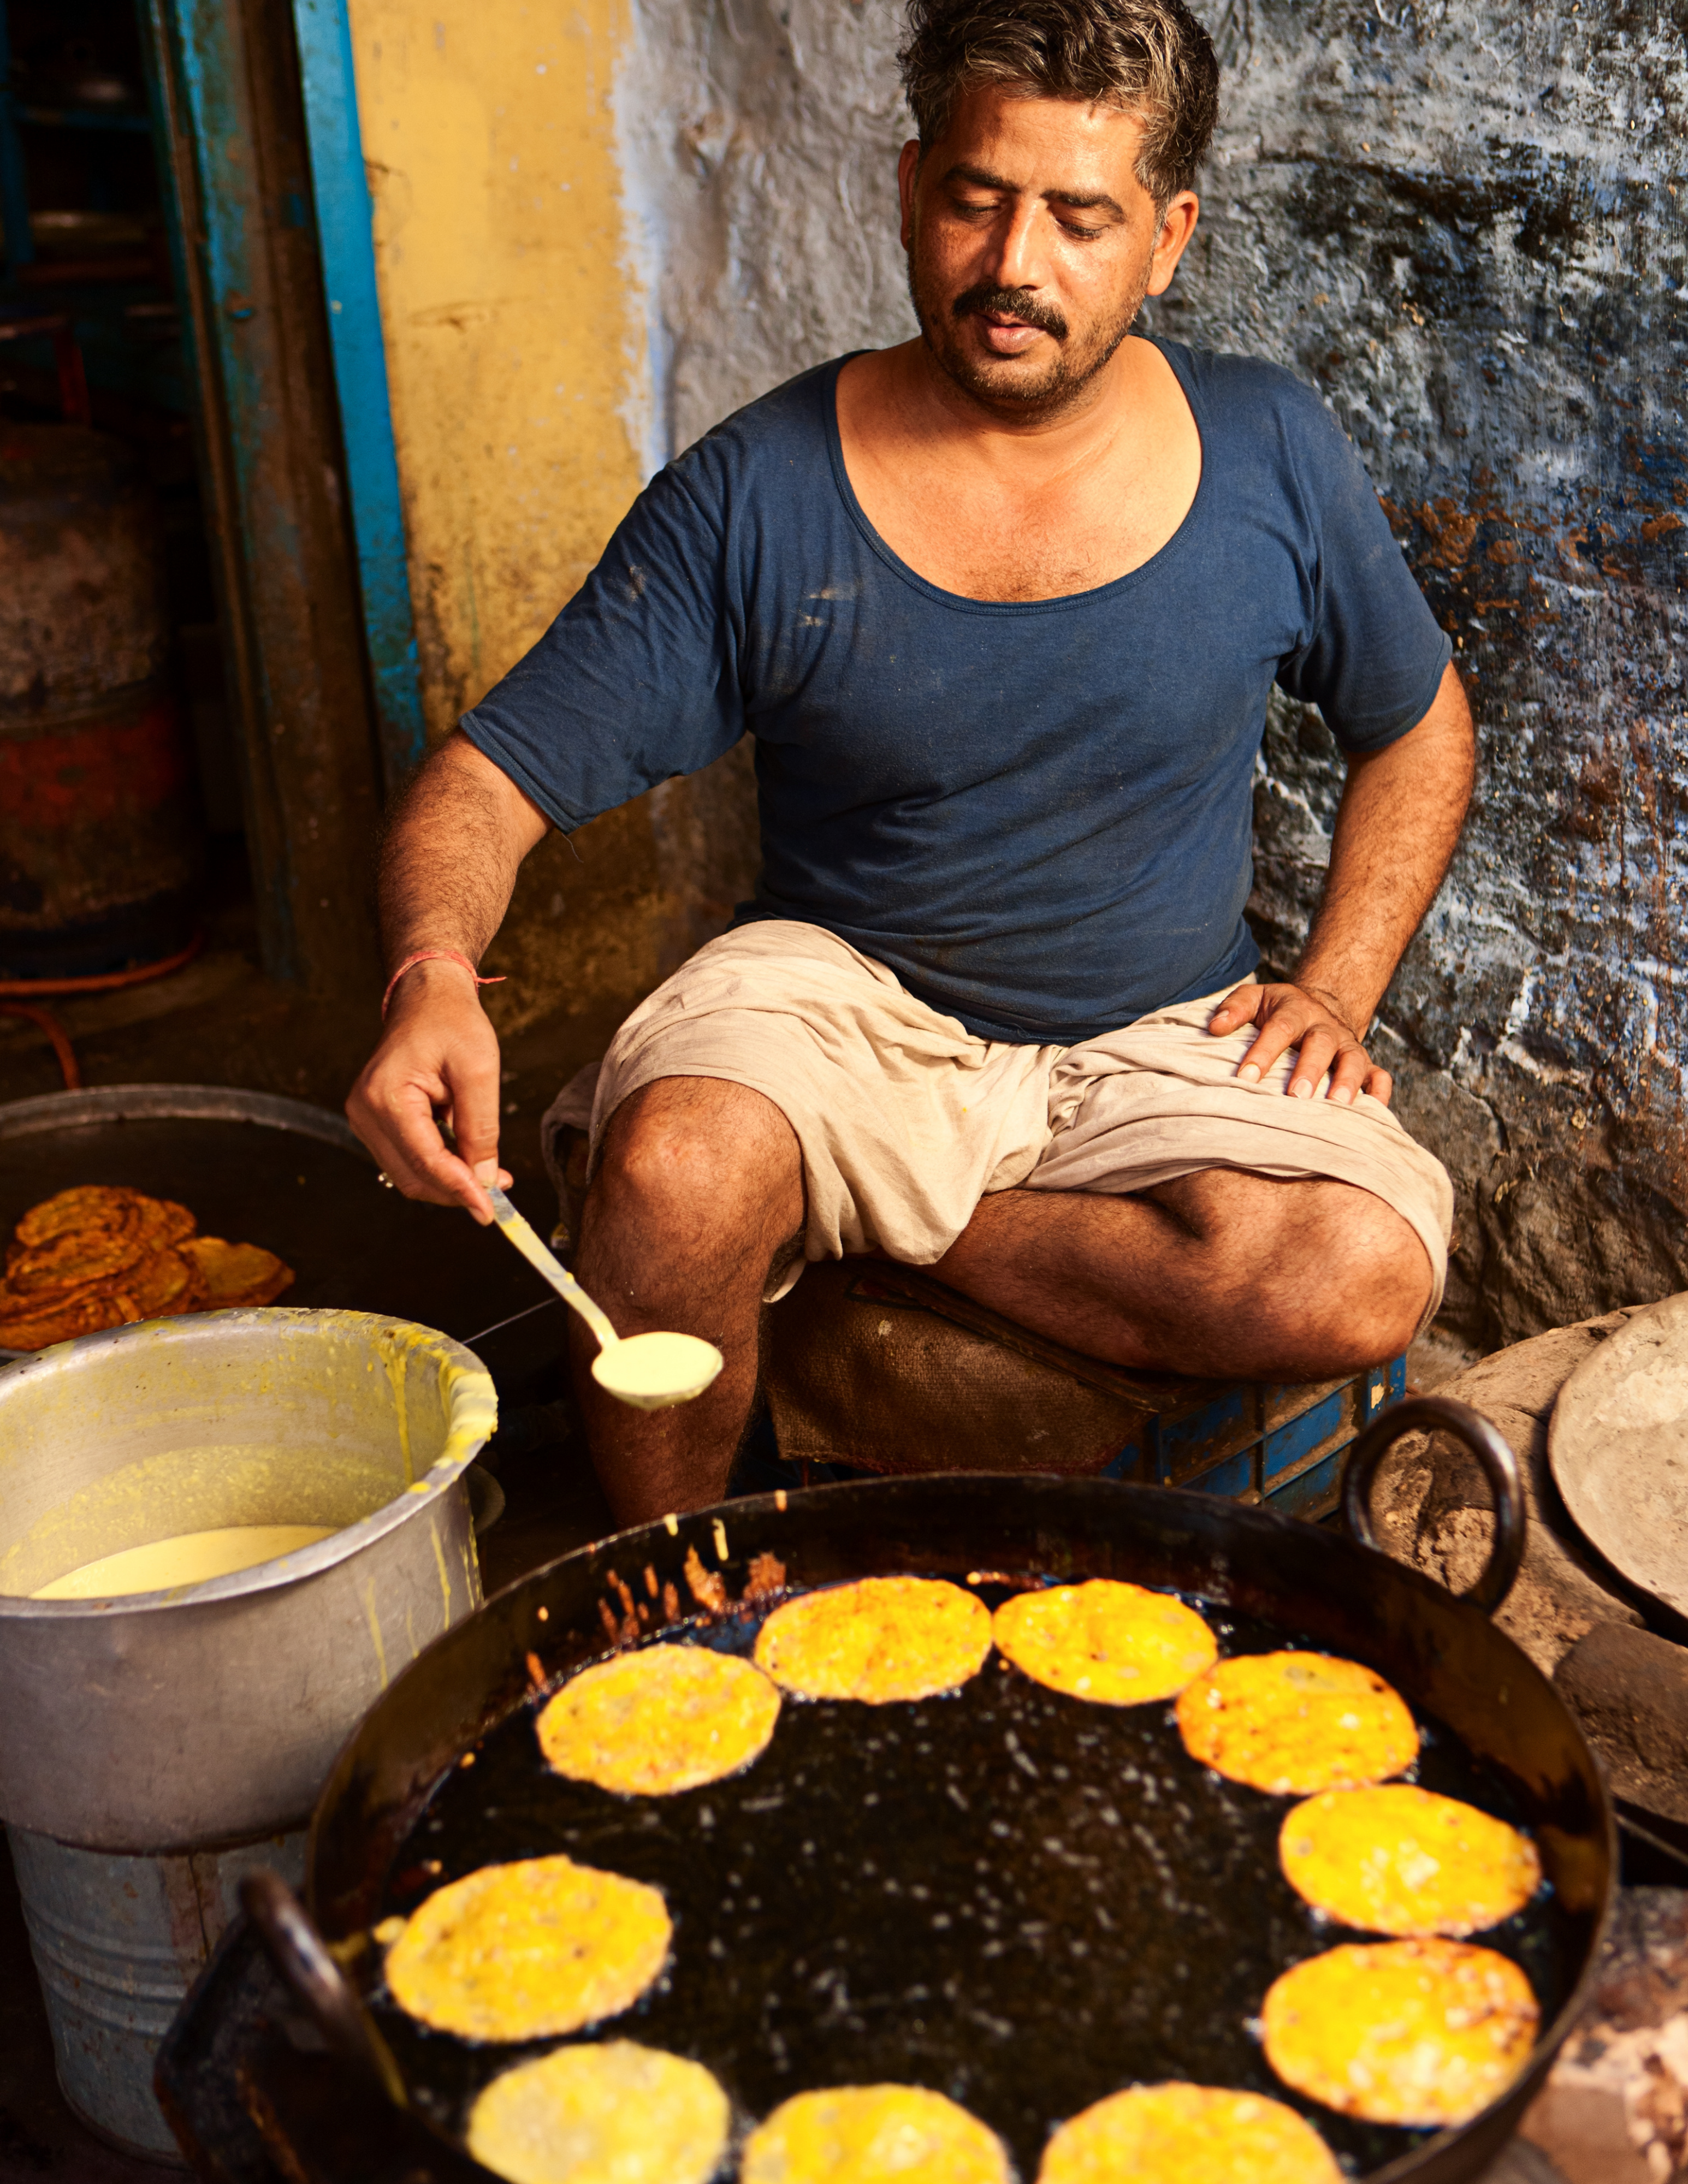 Street vendor preparing food in India